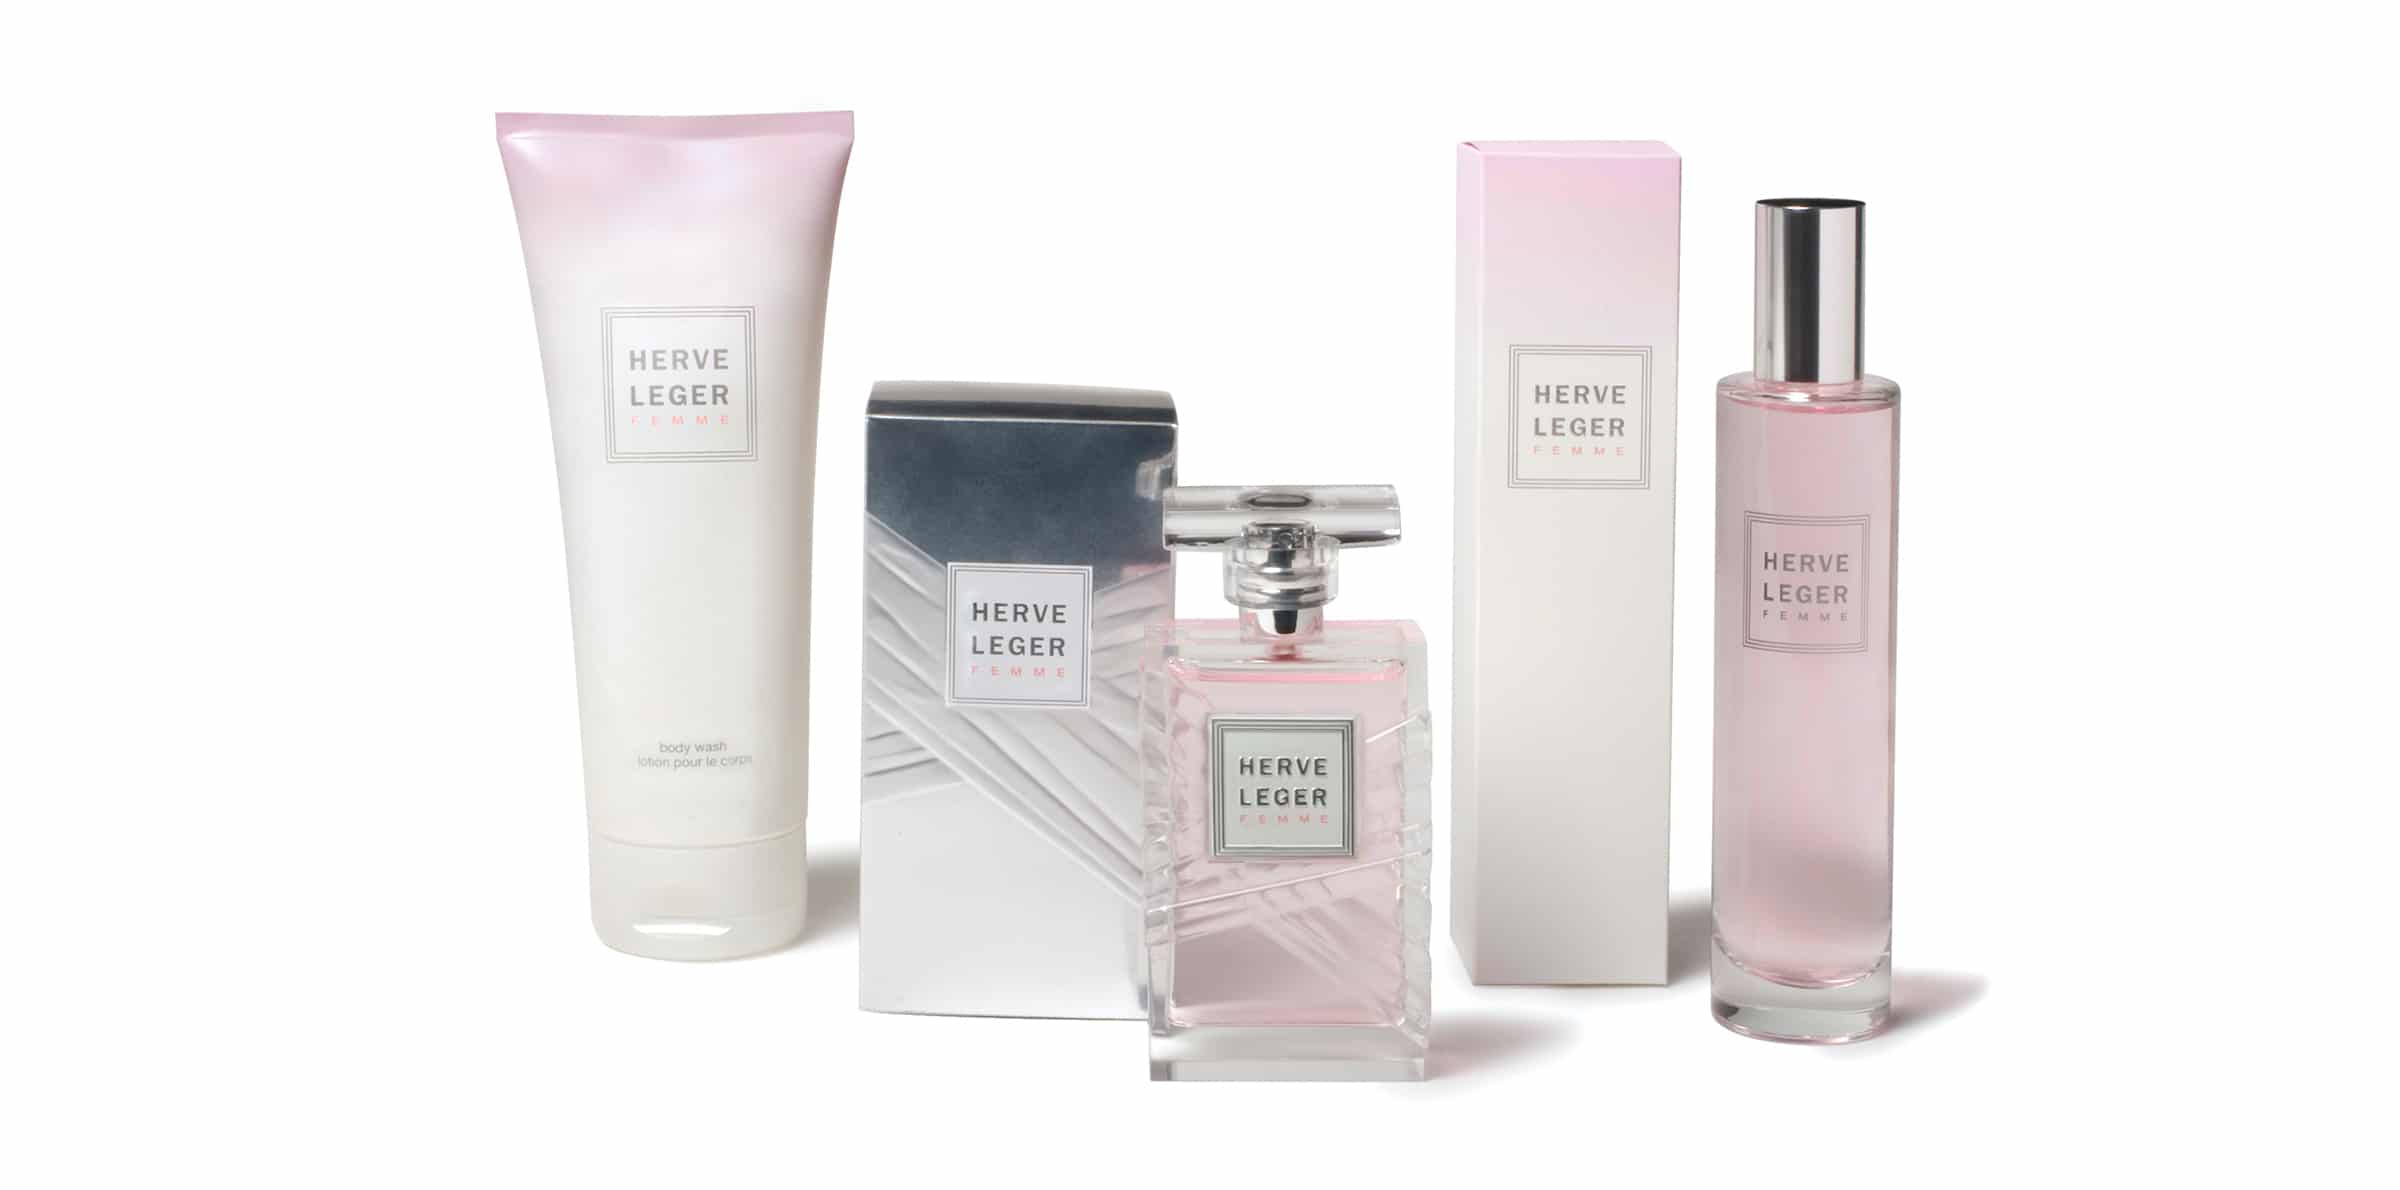 Custom Made Glass Perfume Bottles: Herve Leger fragrance bottle packaging design with a feminine feel and color palette of light pink, white, and dark grey.